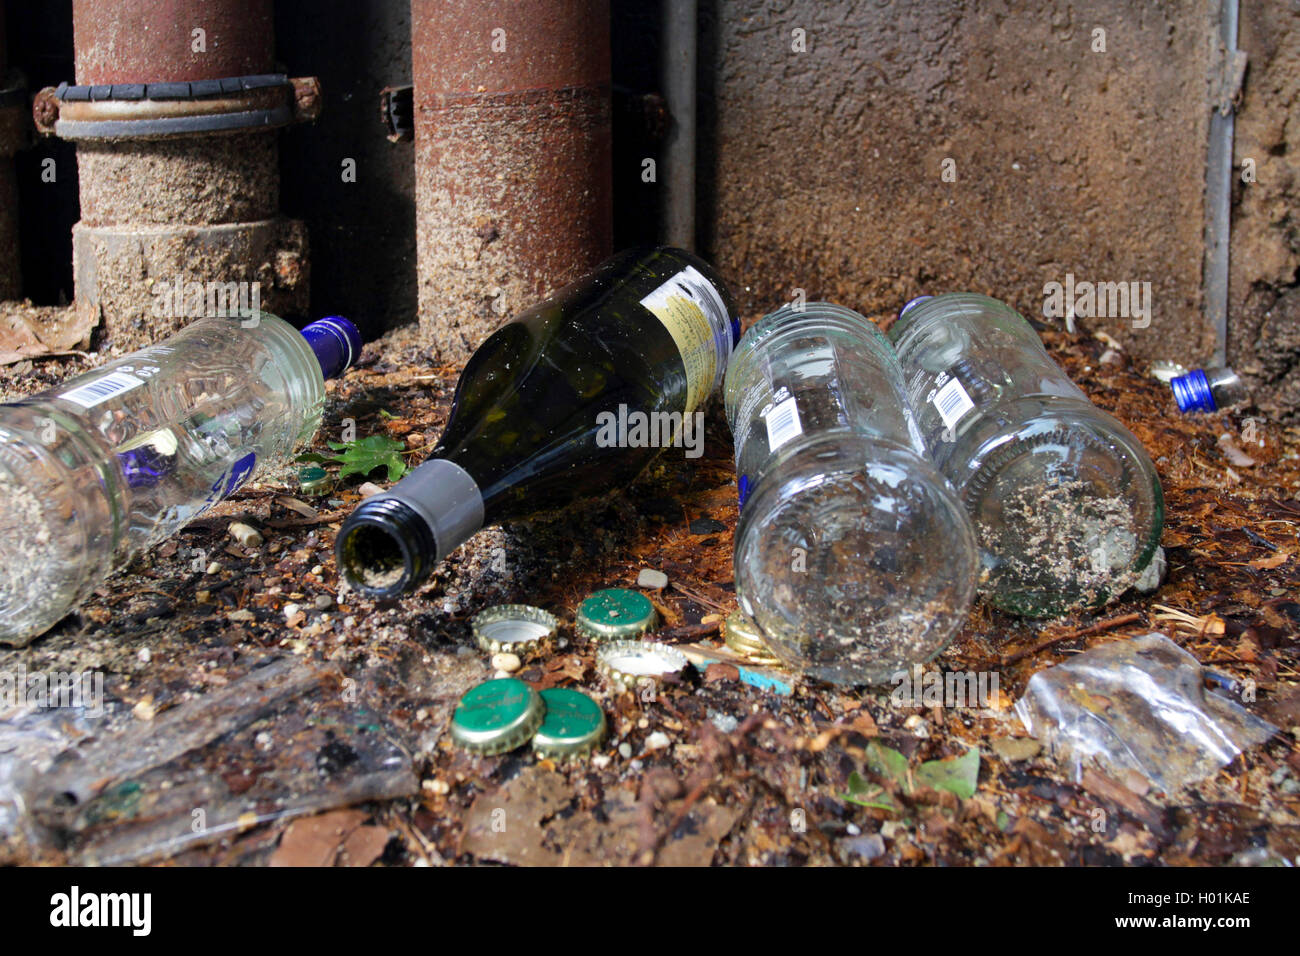 A Flaschen von Alkoholikern un einer Strassenecke, Deutschland | bottiglie vuote di alcolisti in un angolo, Germania | BLWS432414.jpg Foto Stock